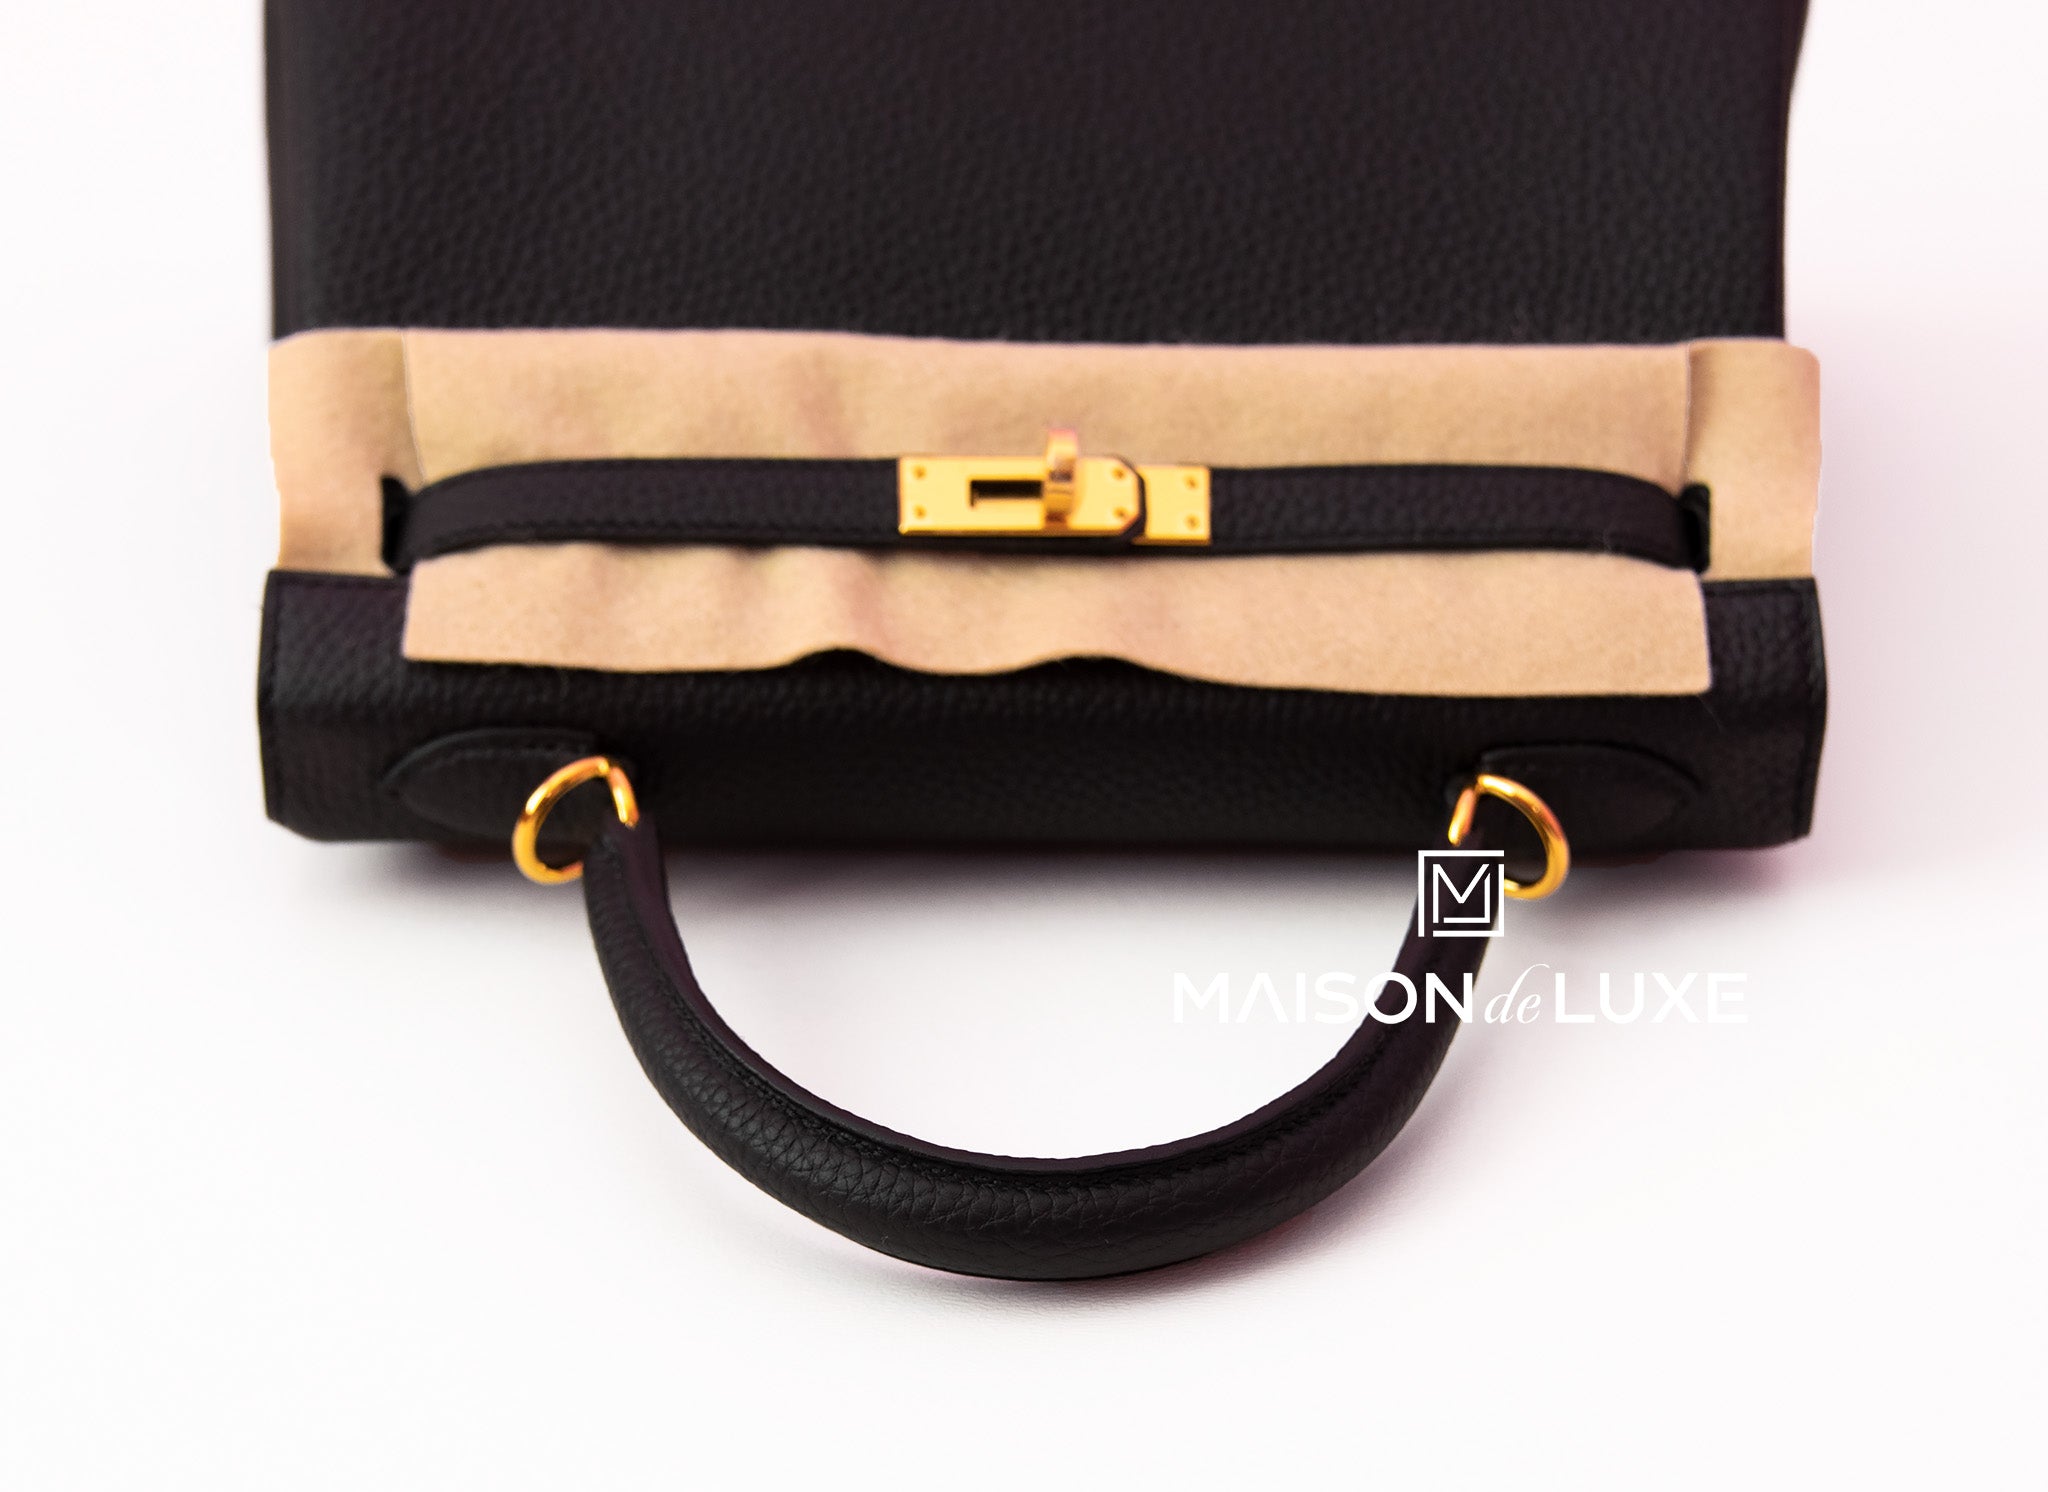 Kelly 25 leather handbag Hermès Black in Leather - 26514336